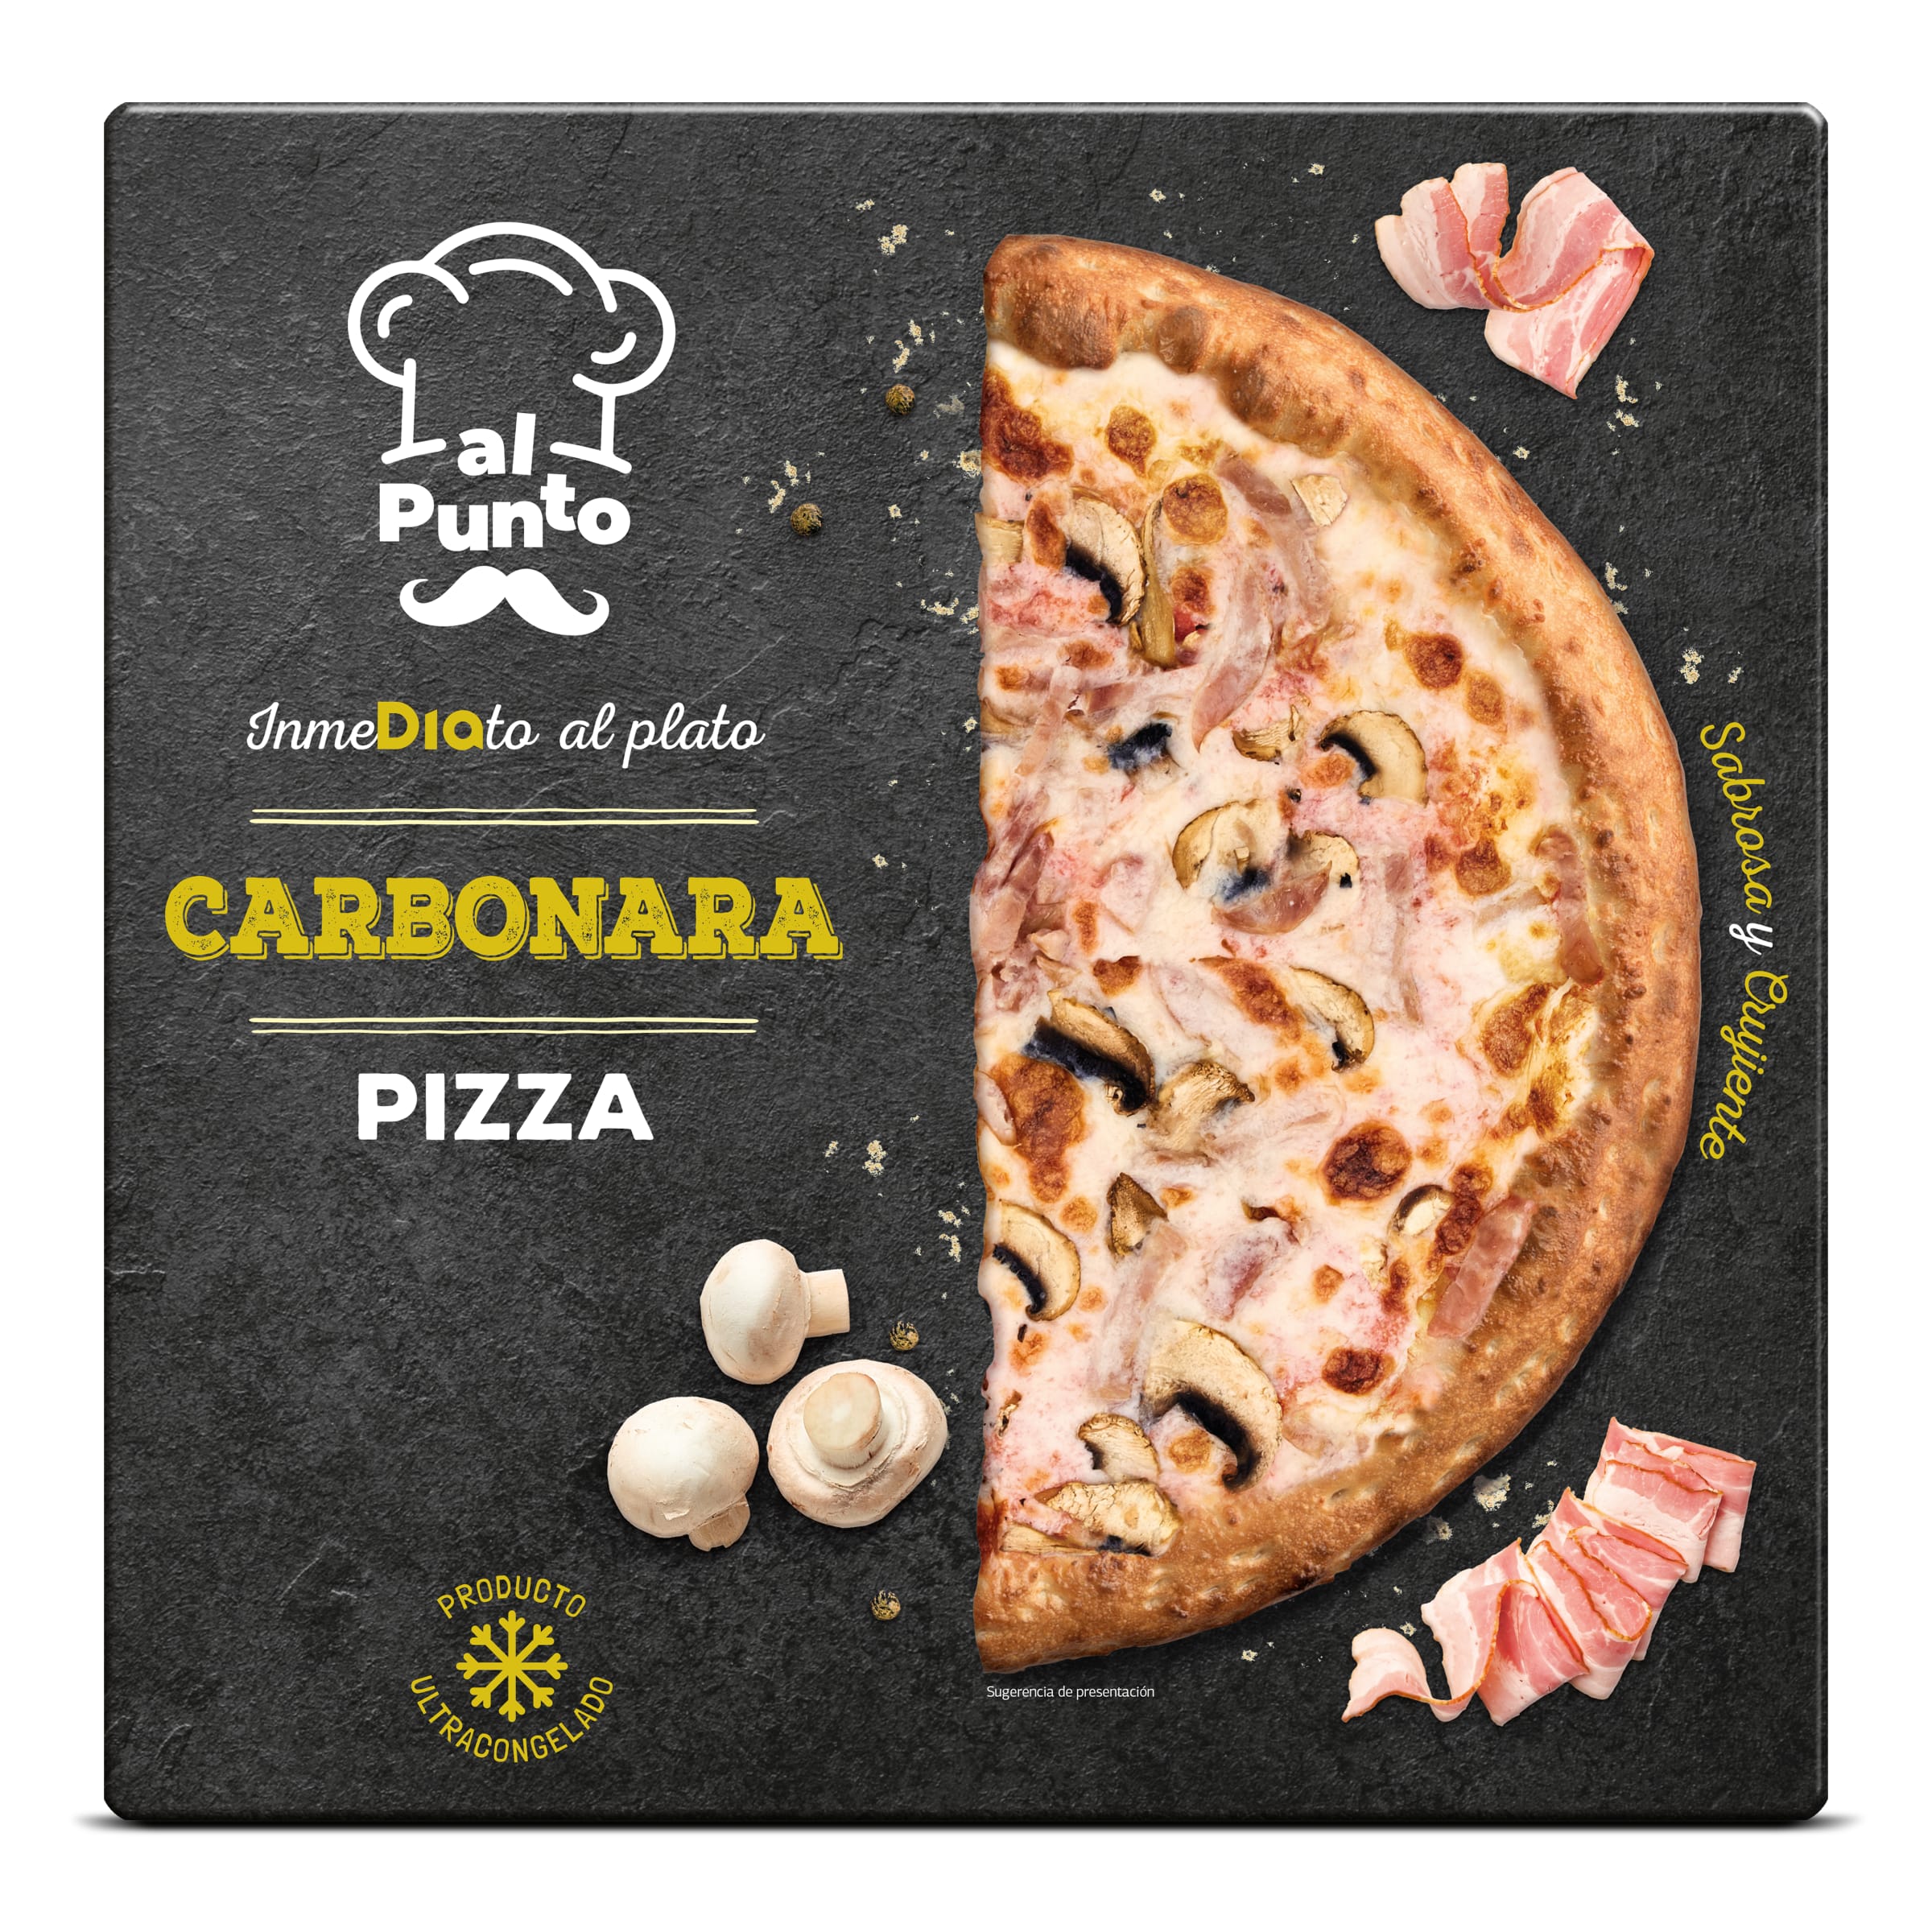 Pizza carbonara AL PUNTO CAJA 465 GR - Supermercados DIA